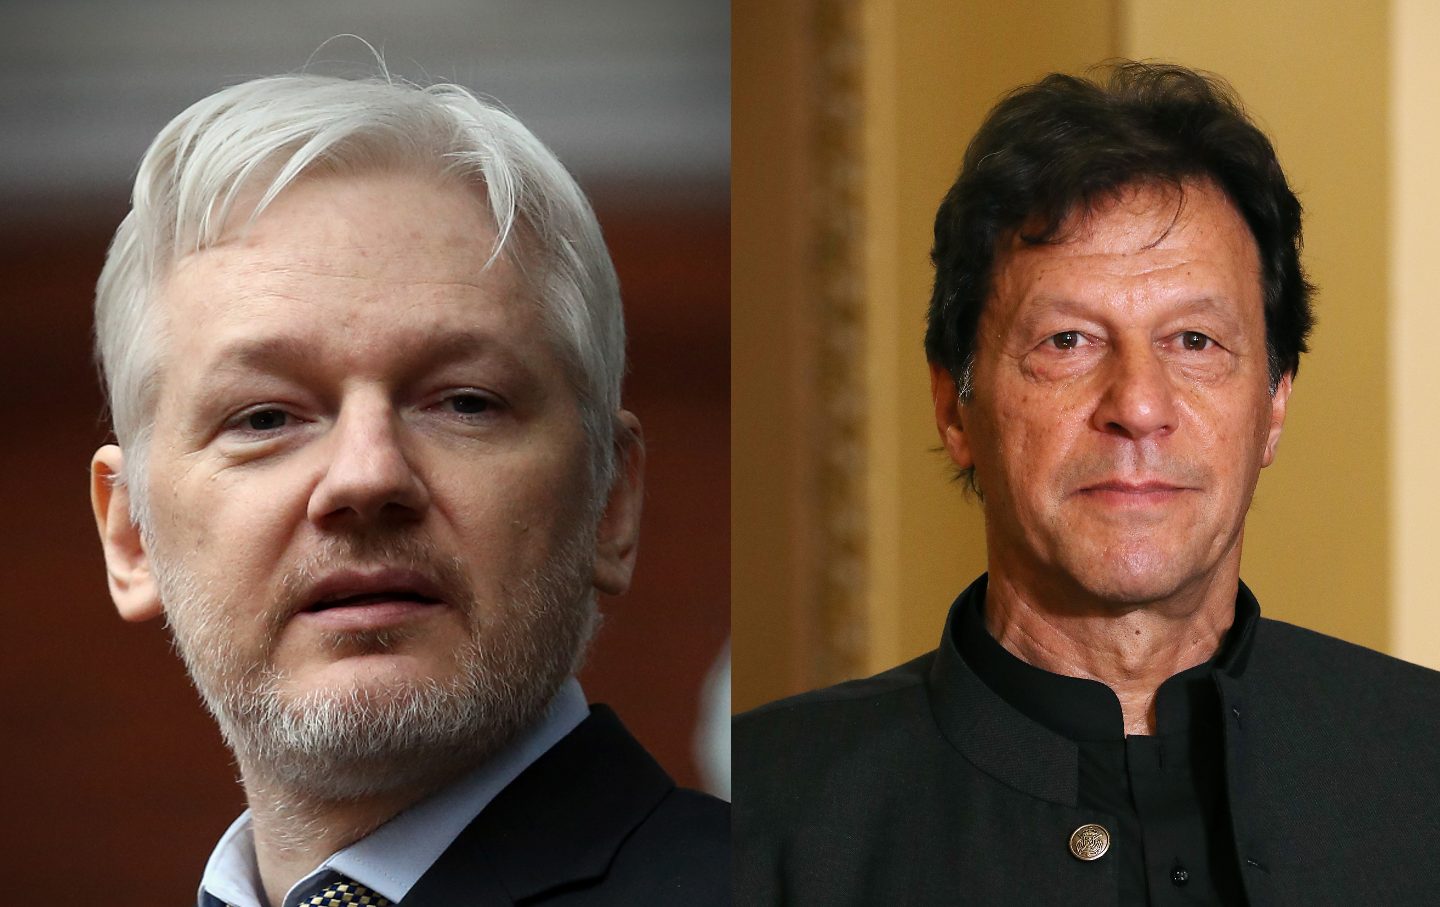 Wikileaks-Gründer Julian Assange (links) und der ehemalige pakistanische Premierminister Imran Khan (rechts)